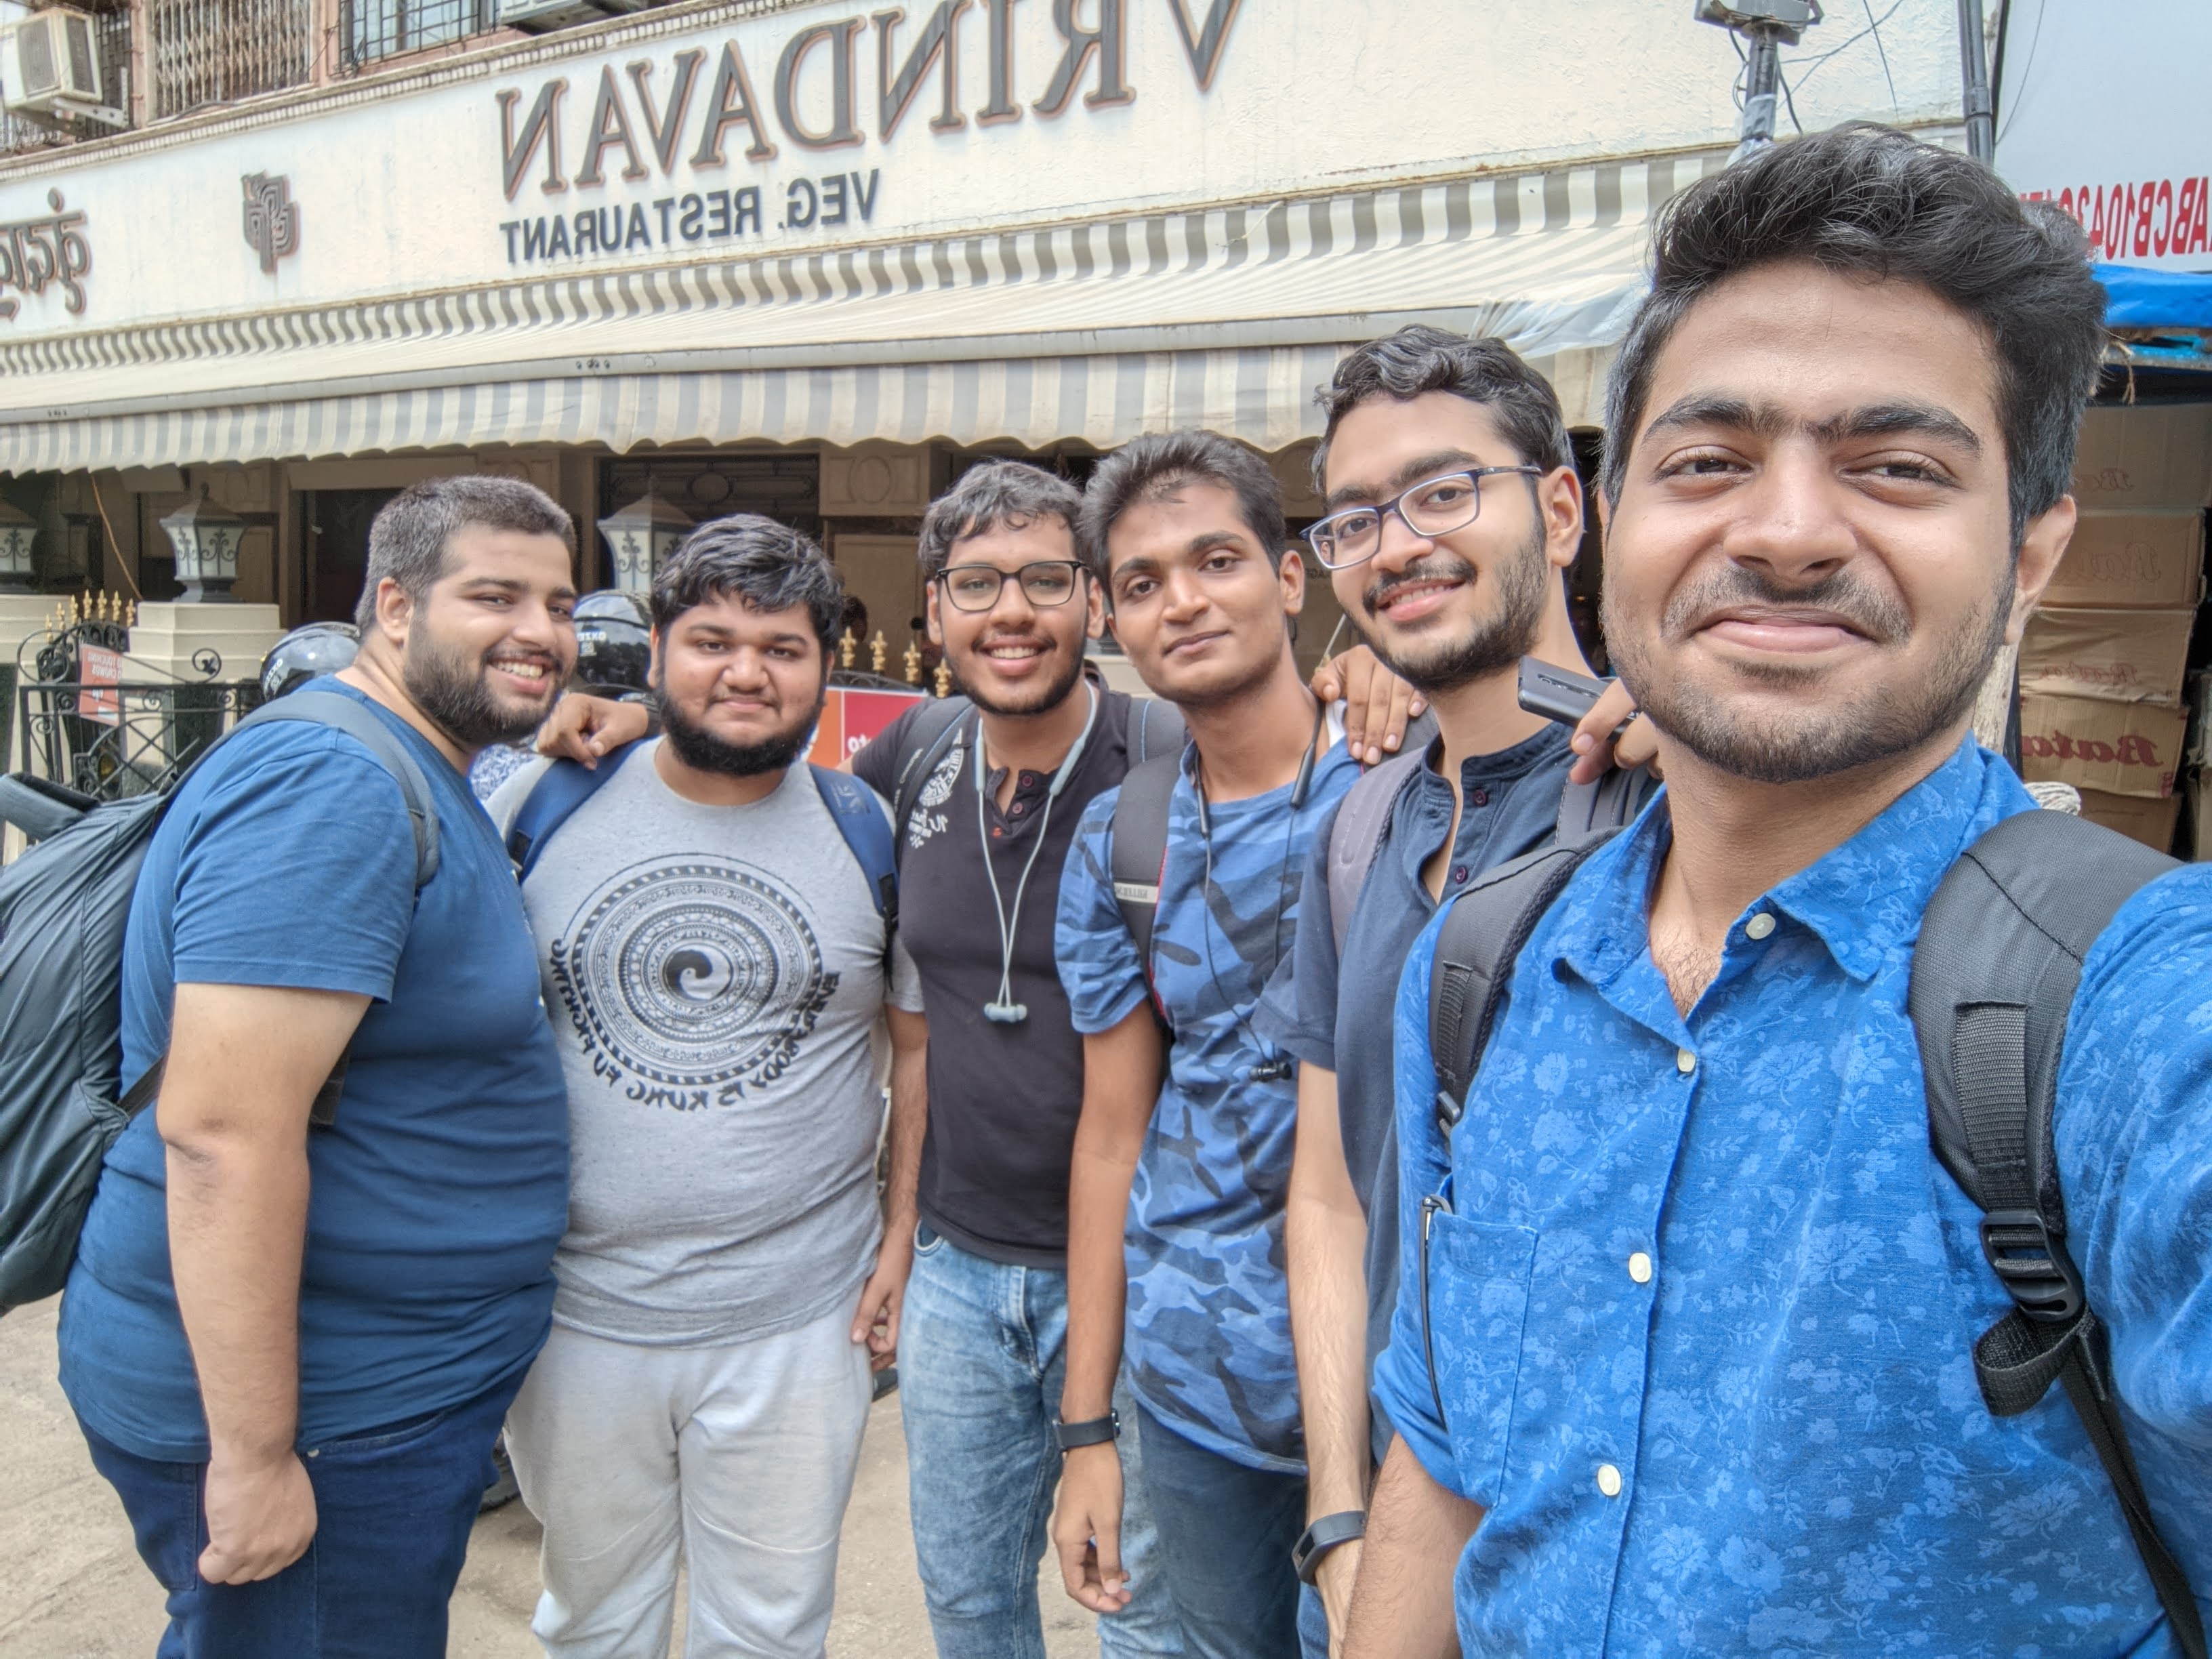 A group photo consisting me, Harsh, Kartik, Dheeraj, Tushar, and Pranav